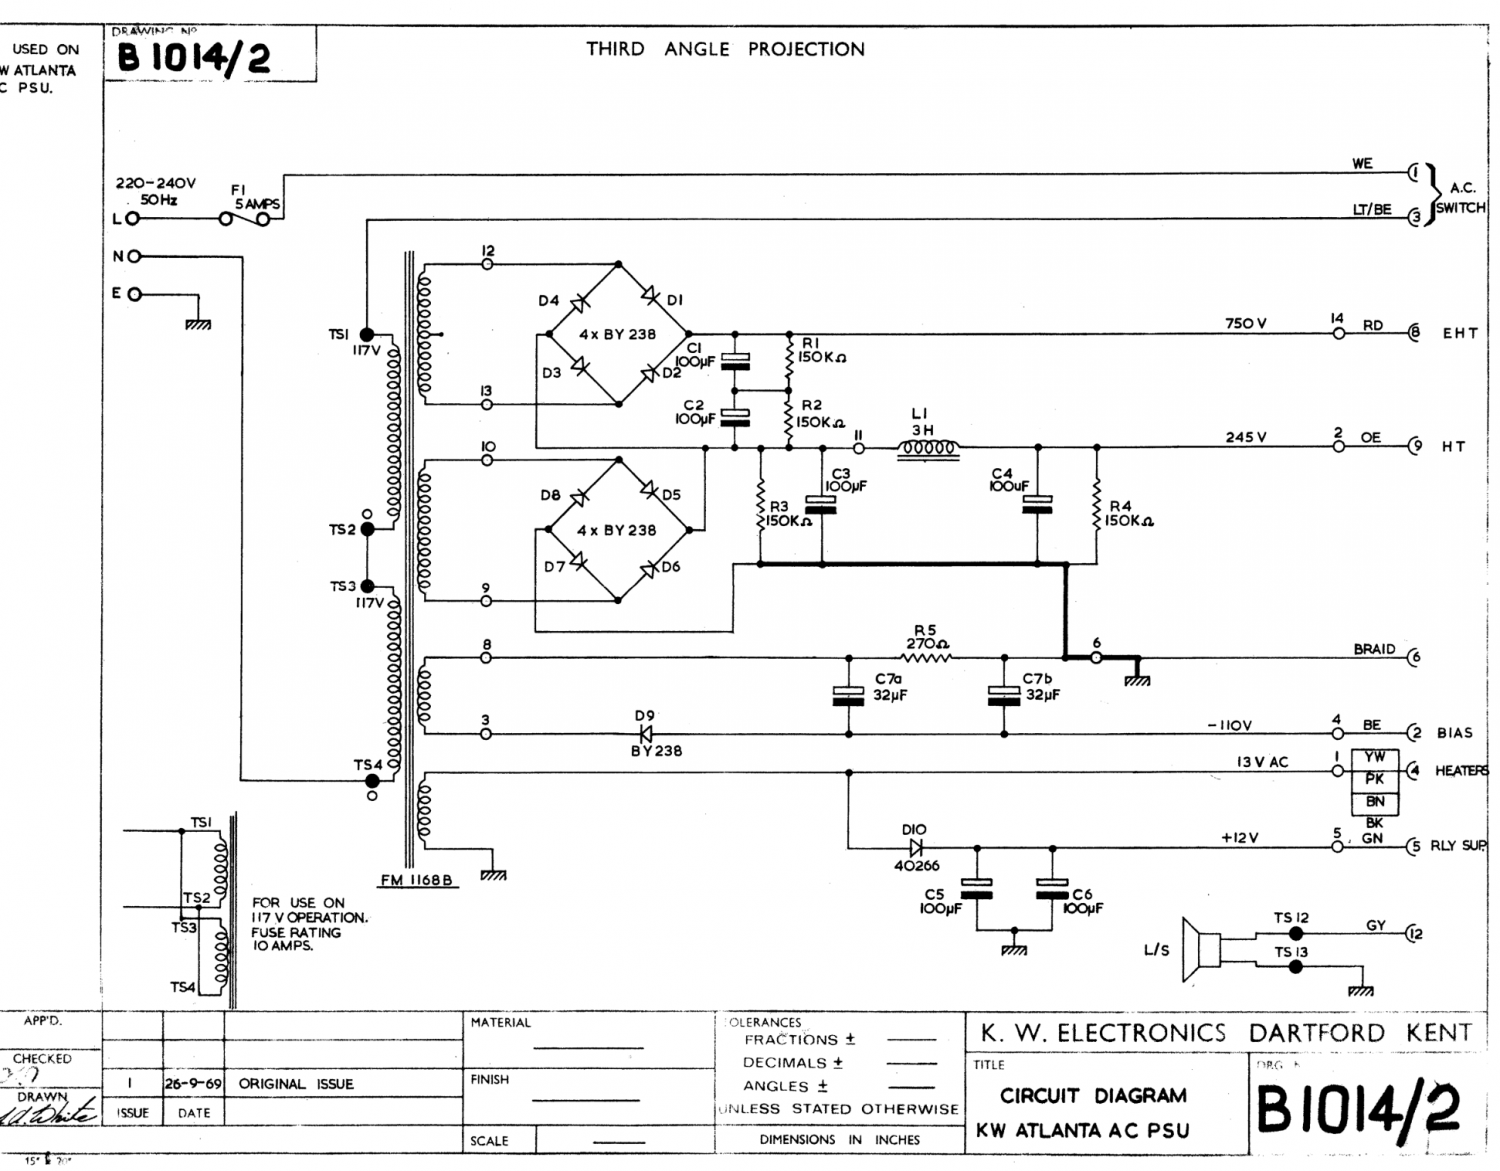 KW Atlanta - Power Supply Schematic Diagram B1014-2 (Clean Version)